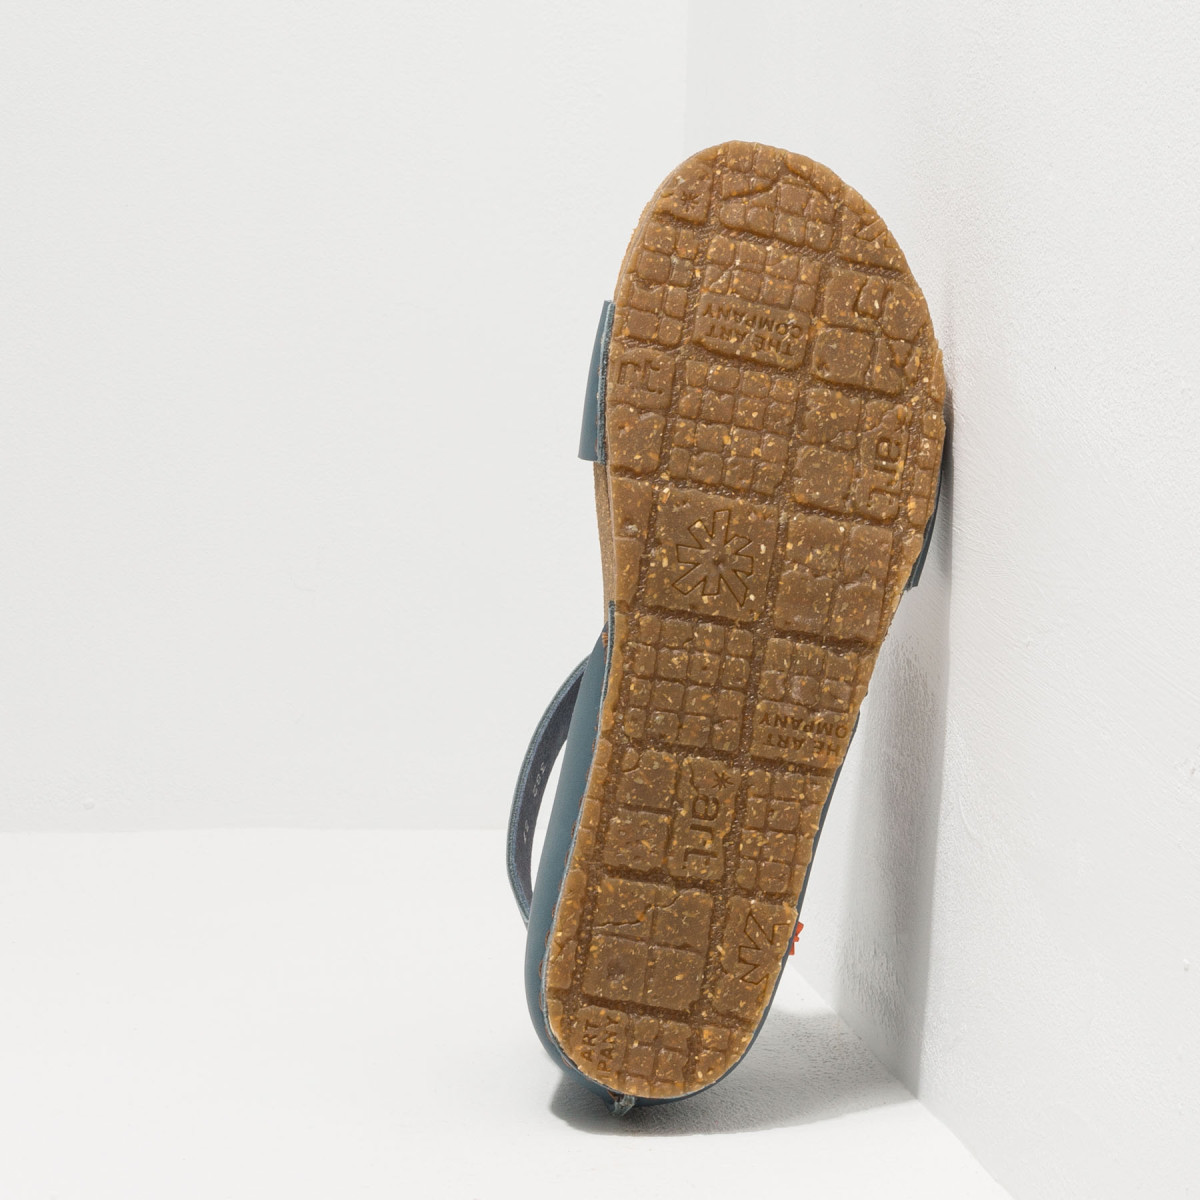 Sandales plates fermées au talon en cuir - Bleu - art